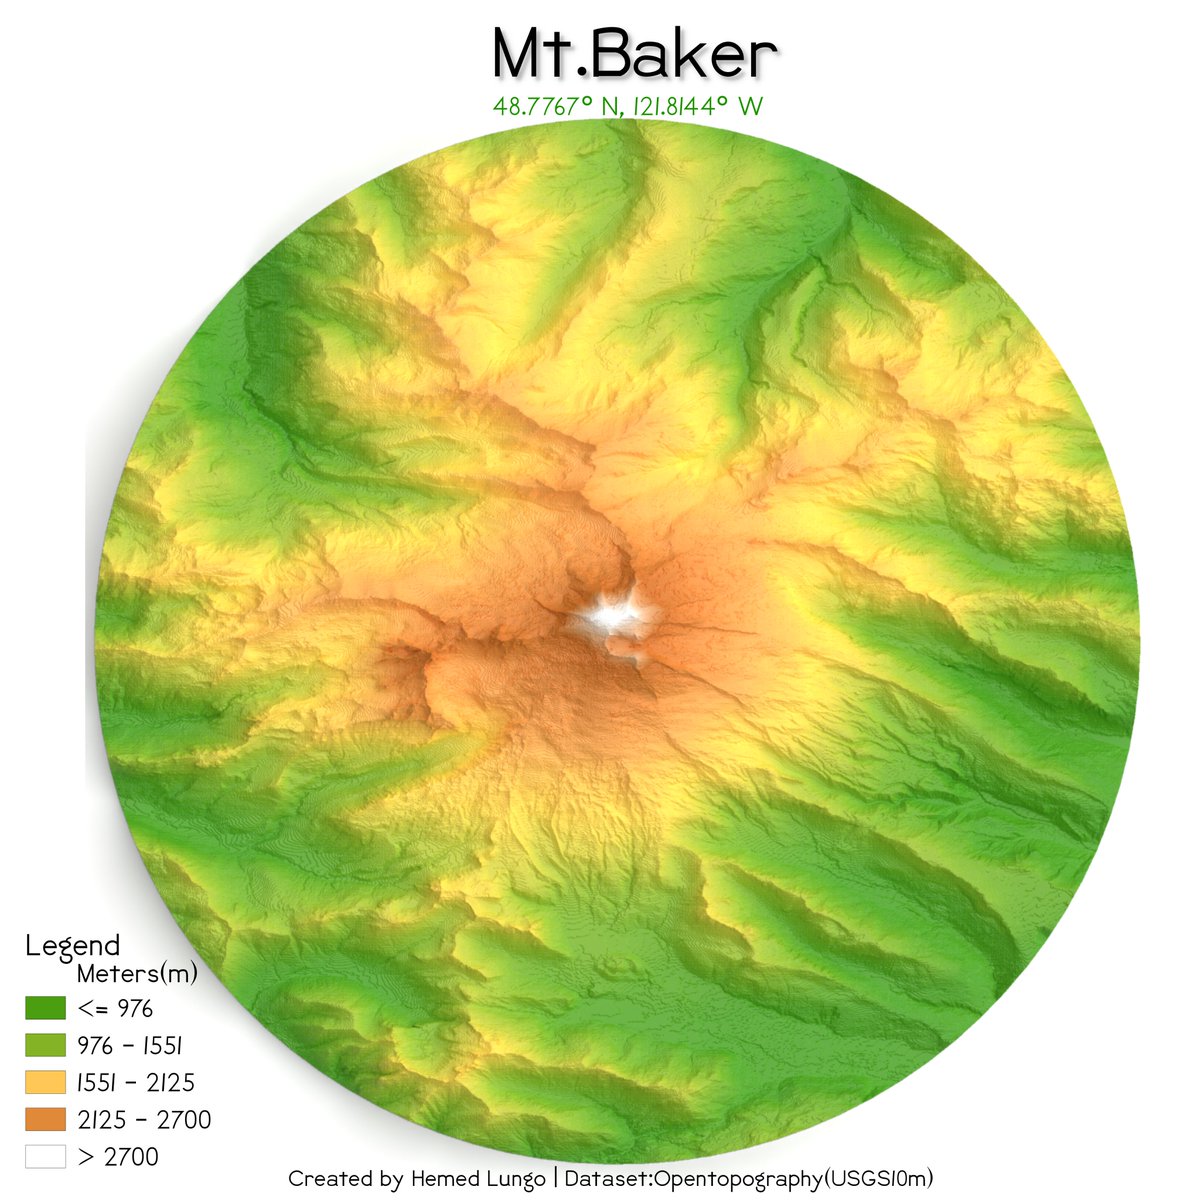 A Map🗺️Showing Mount Baker🏔️ found in Washington State,U.S🇺🇸Dataset from @OpenTopography USGS(10m). #MtBaker #USA #America #WashingtonState  #gischat #geospatial #blender #b3d #qgis #dataviz #Datavisualization (1/2)